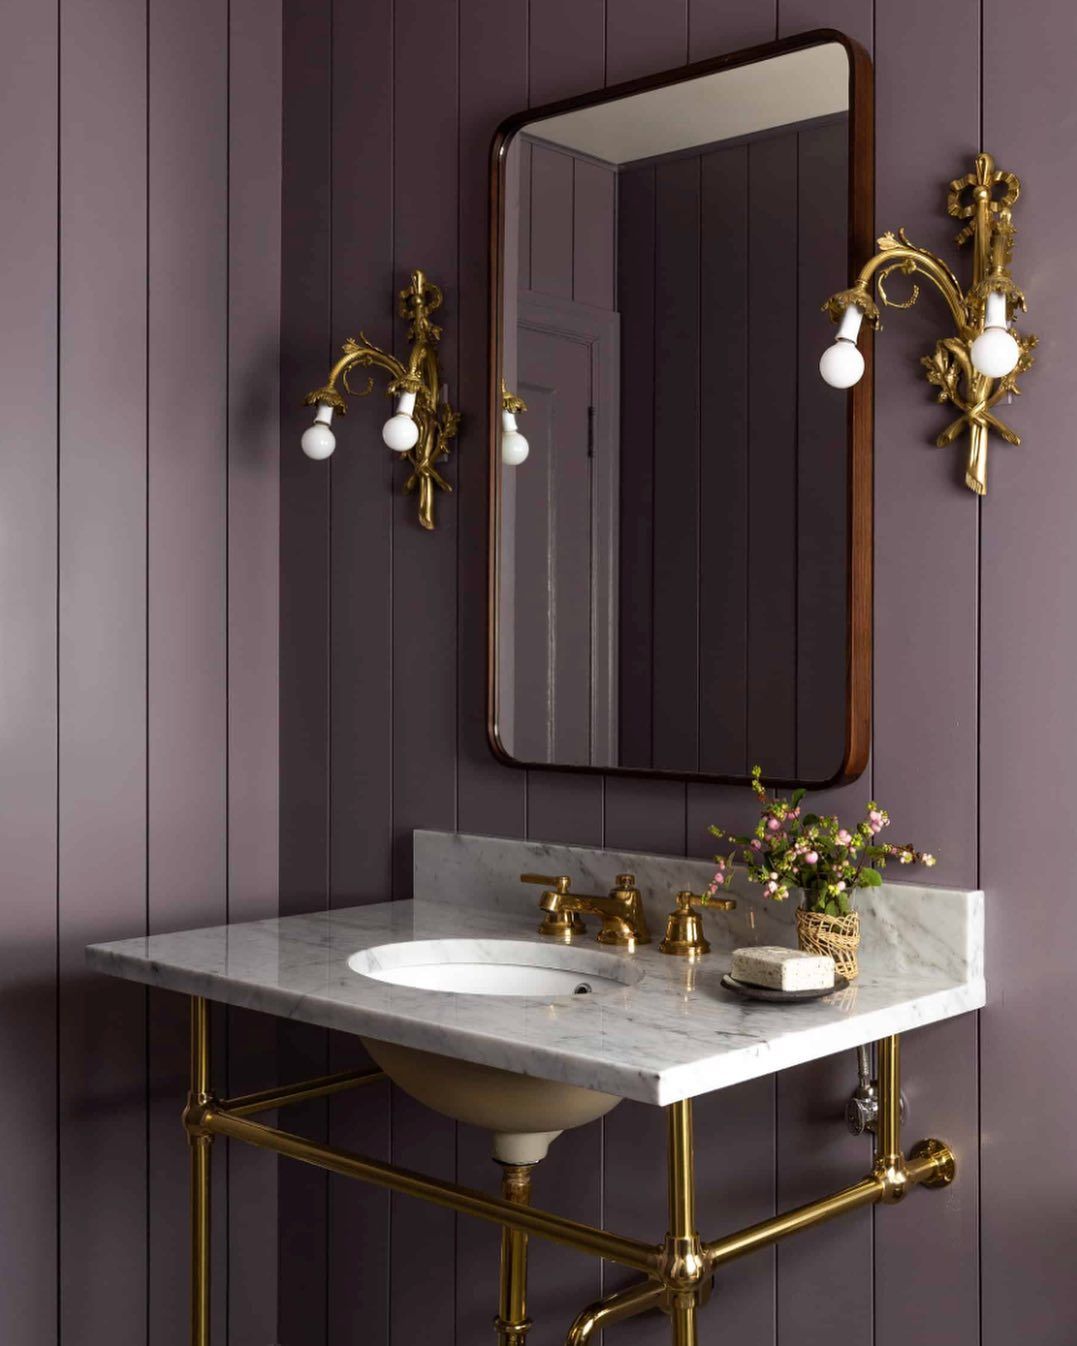 Wainscoting in Dark Purple English Traditional Bathroom via @heidicaillierdesign